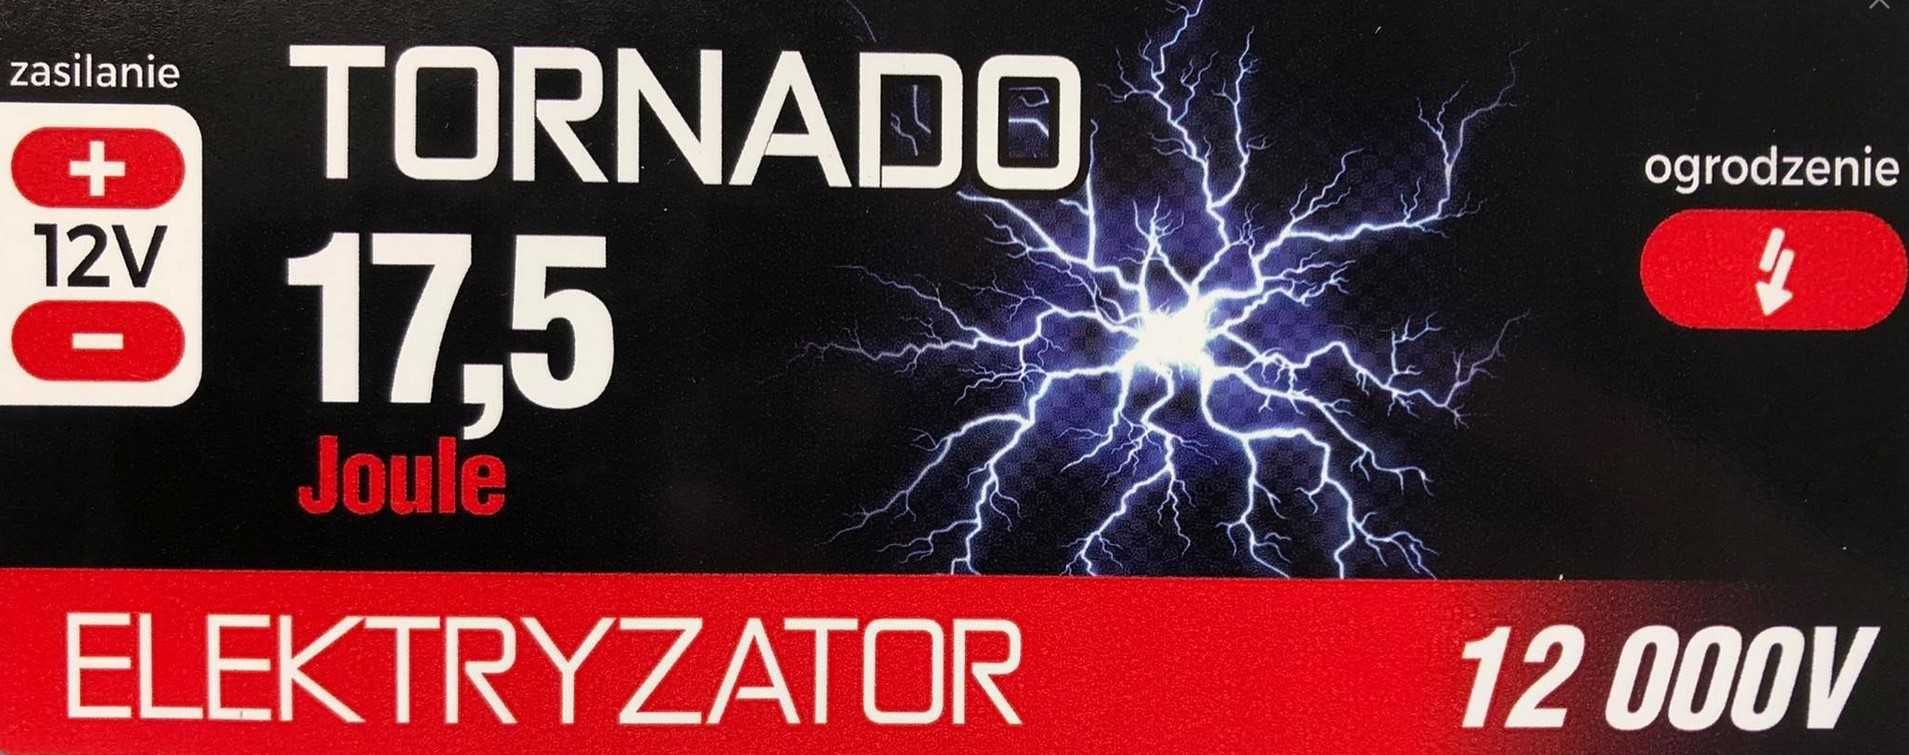 Elektryzator Tornado pastuch o mocy 17,5j